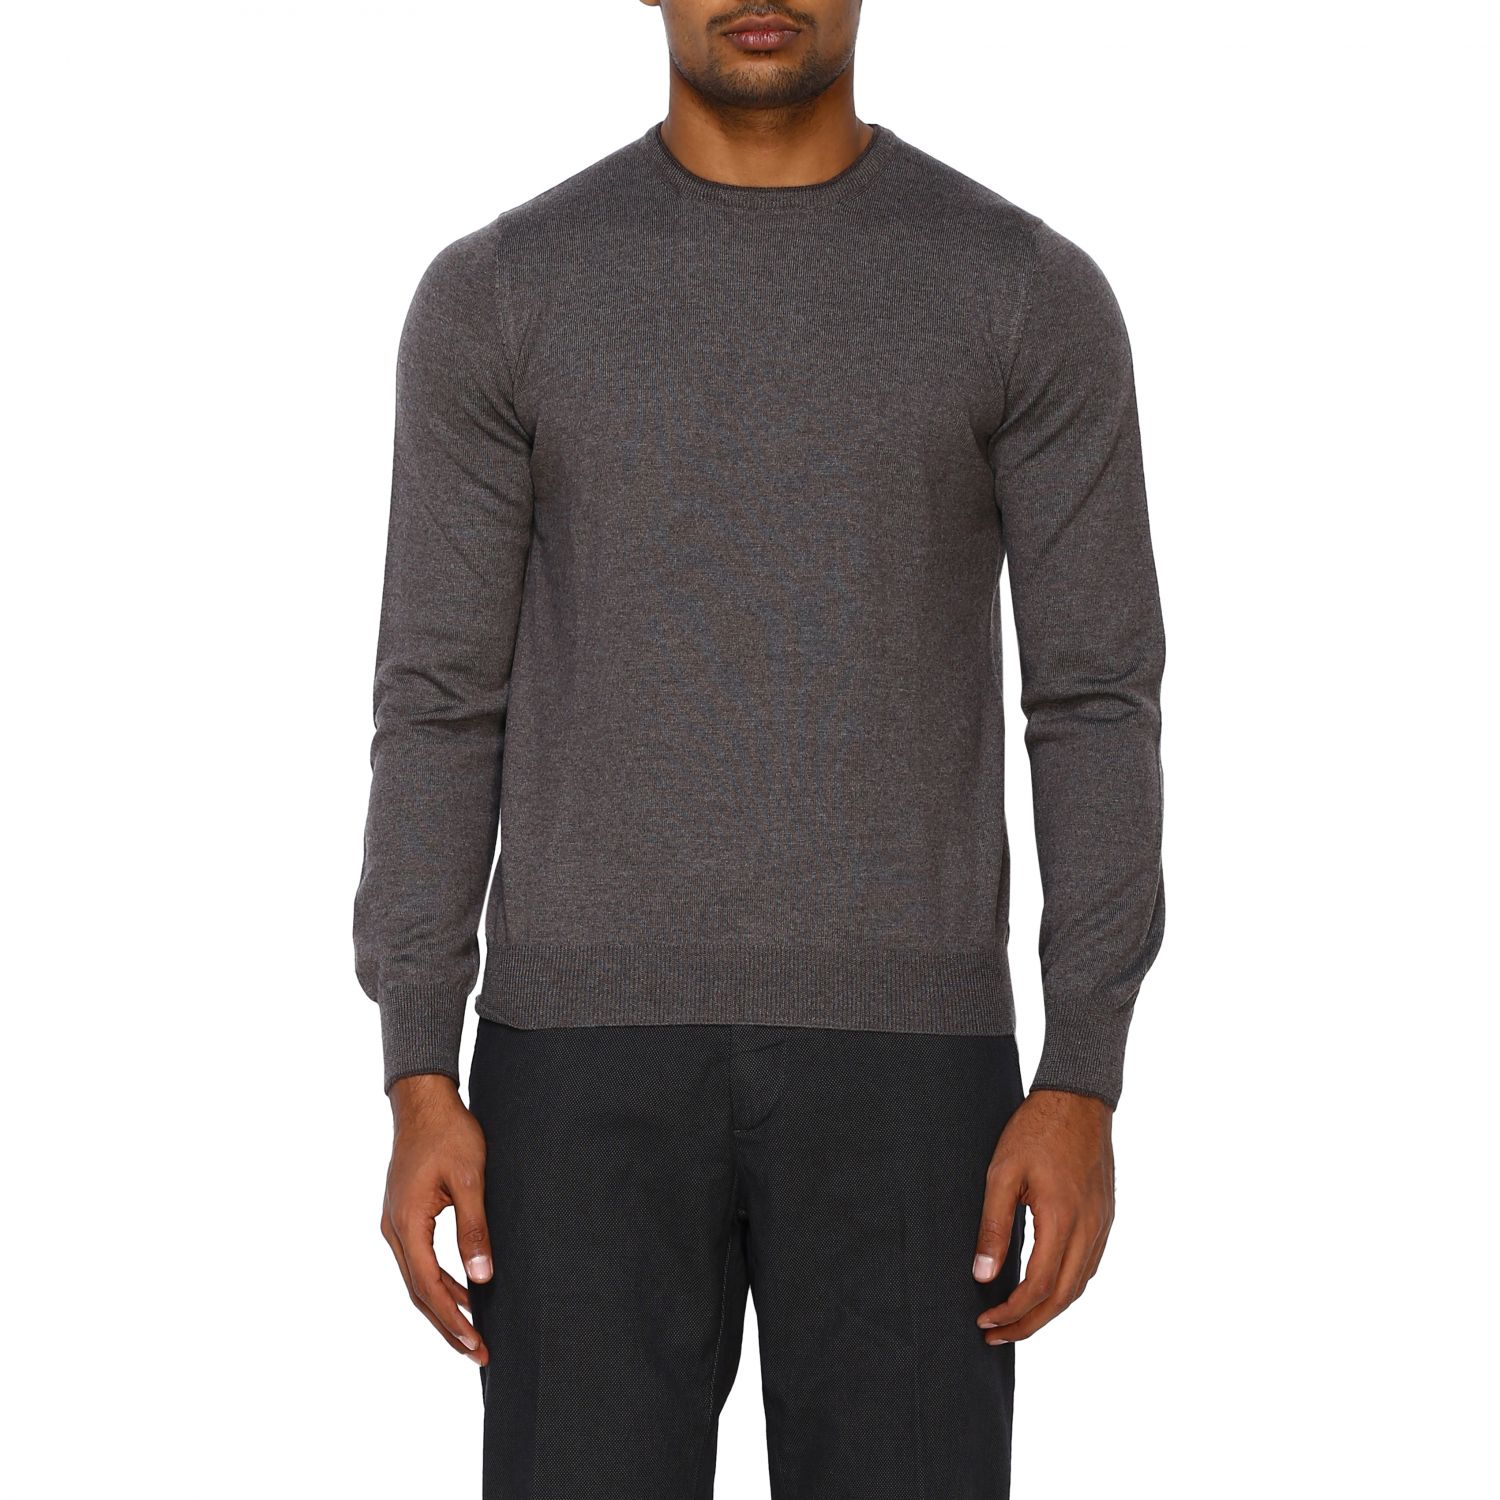 Gran Sasso Outlet: Sweater men | Sweater Gran Sasso Men Dove Grey ...